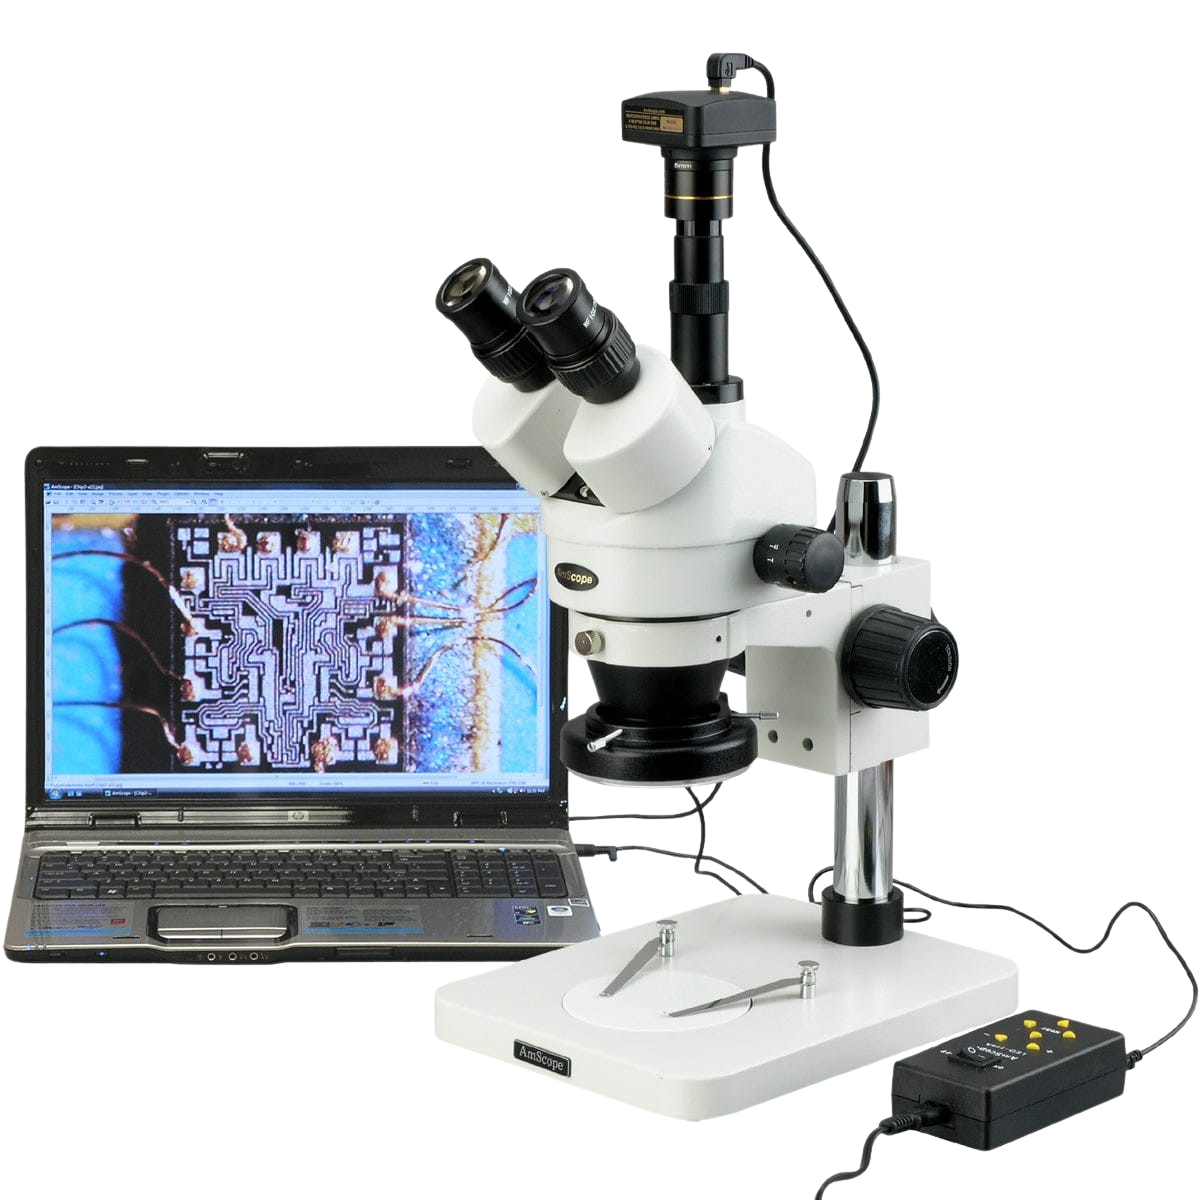 Amscope SM-1TSZ-144A-3M 3.5X - 90X Zoom Stereo Microscope with 4 Zone 144 LED Light Plus 3MP Digital USB Camera New